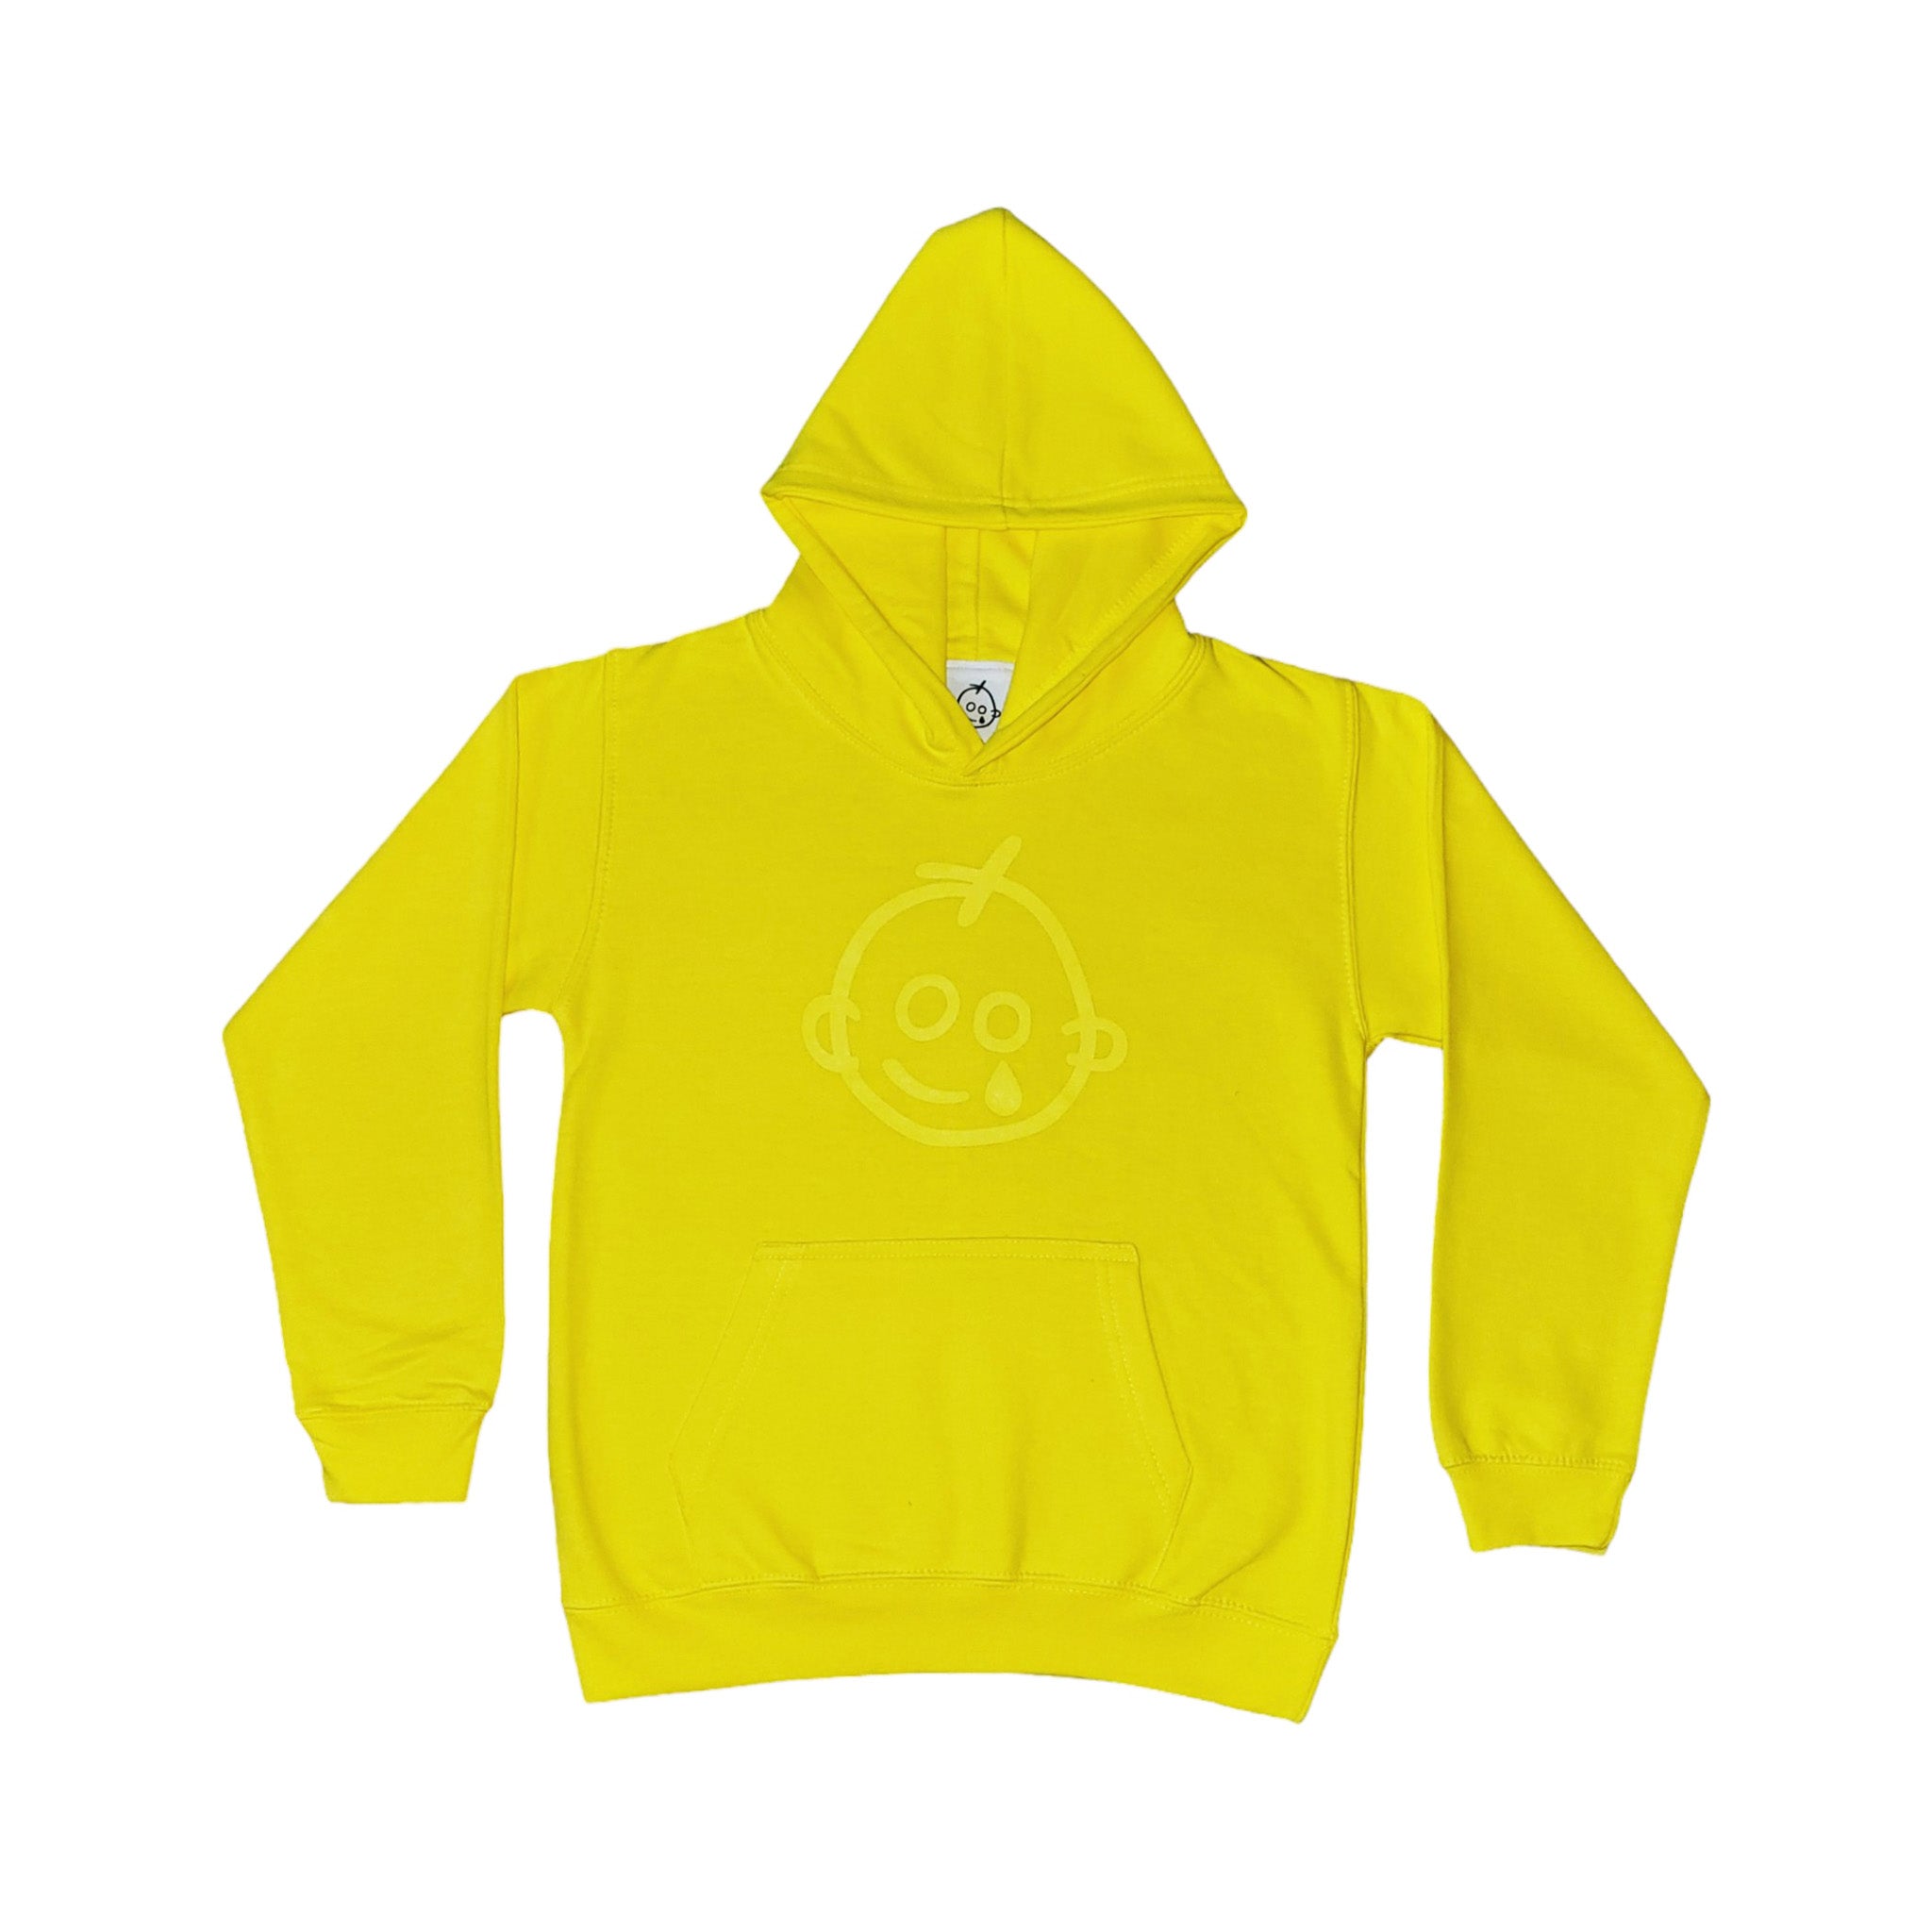 Yellow GOSH Logo Hoodie (Children's size)